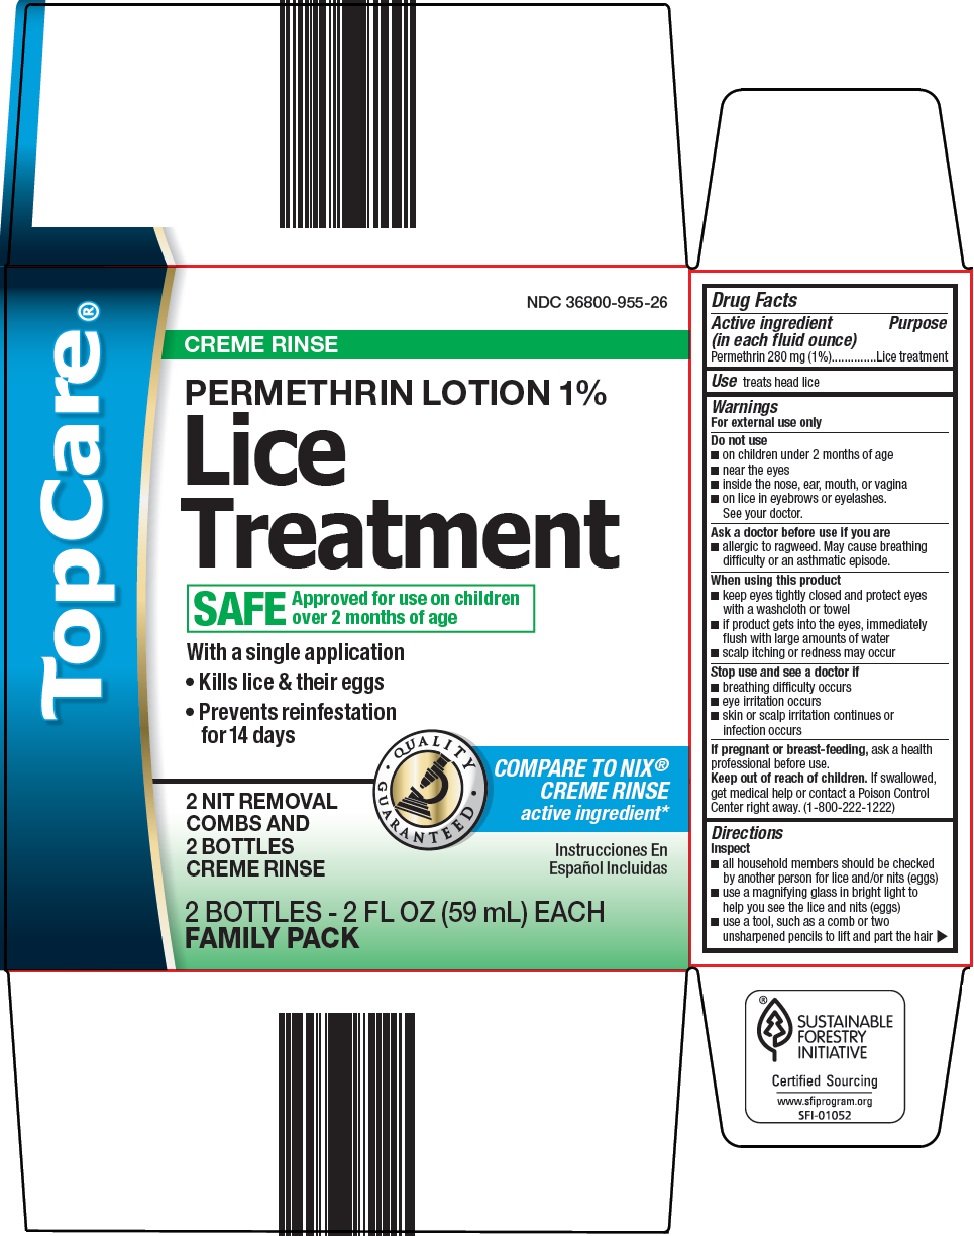 lice treatment image 1